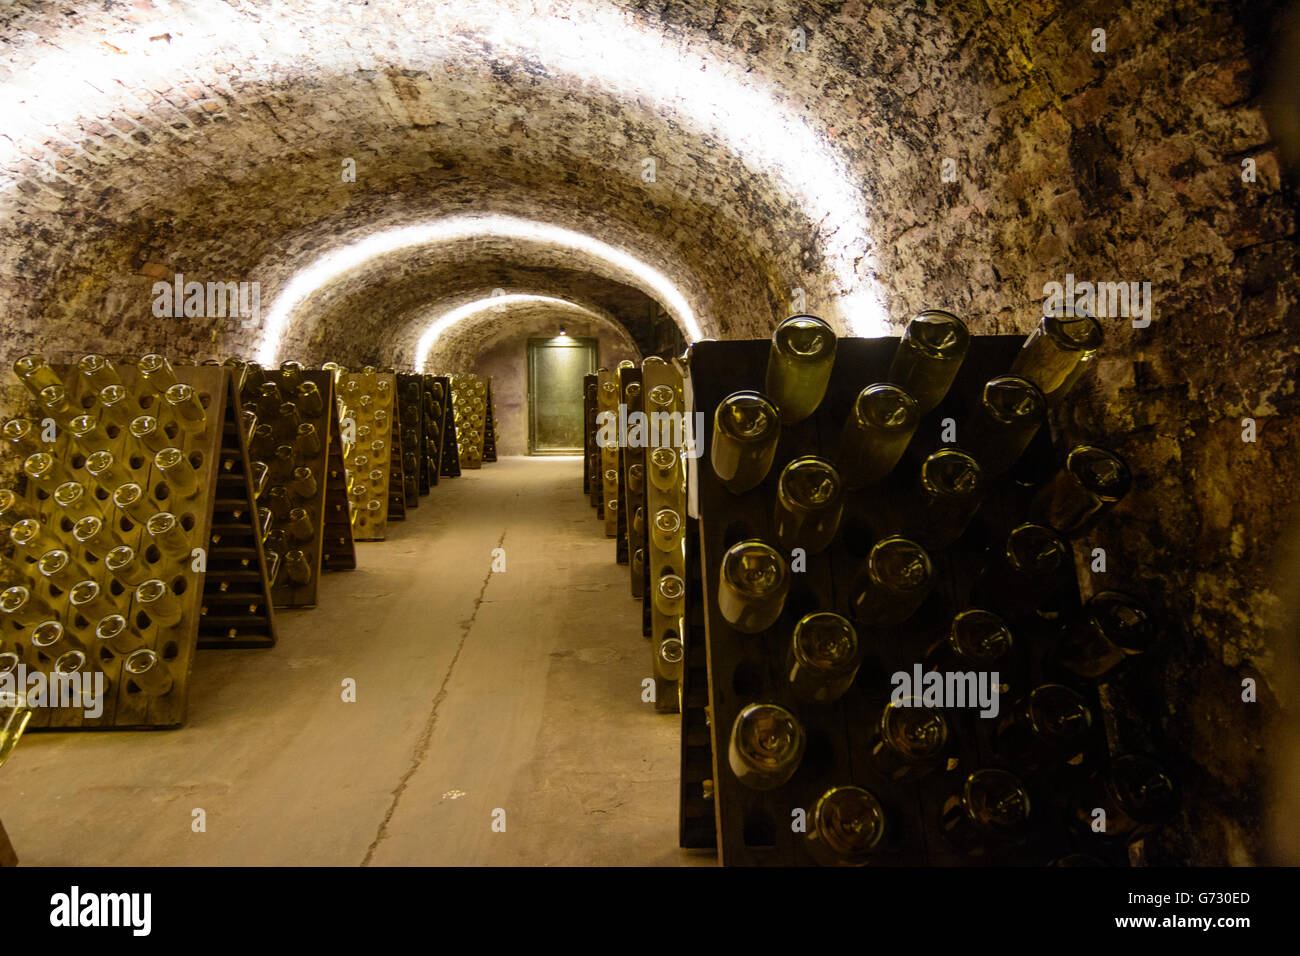 Champagne produttore di vino la Schlumberger, cantina vault, Wien, Vienna, Austria, Wien, 19. Foto Stock